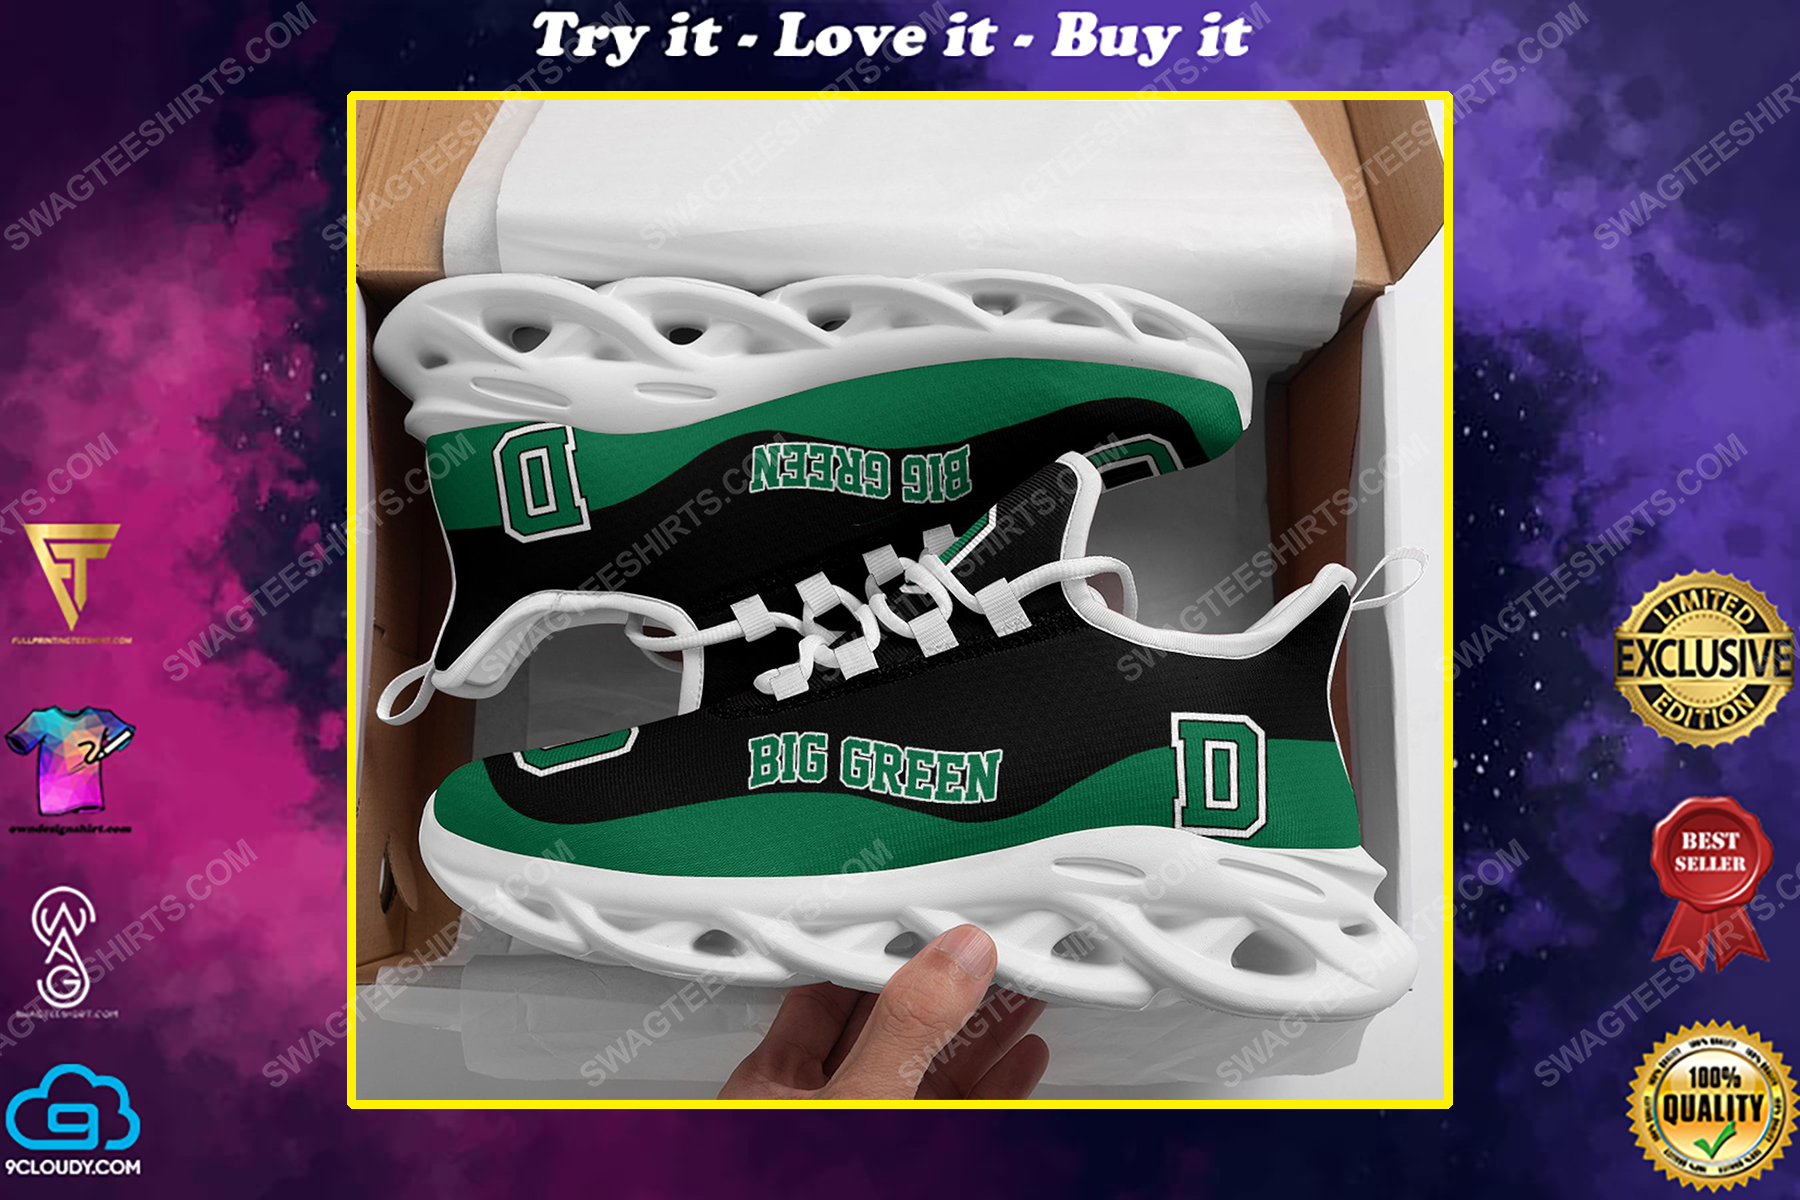 The dartmouth big green football team max soul shoes